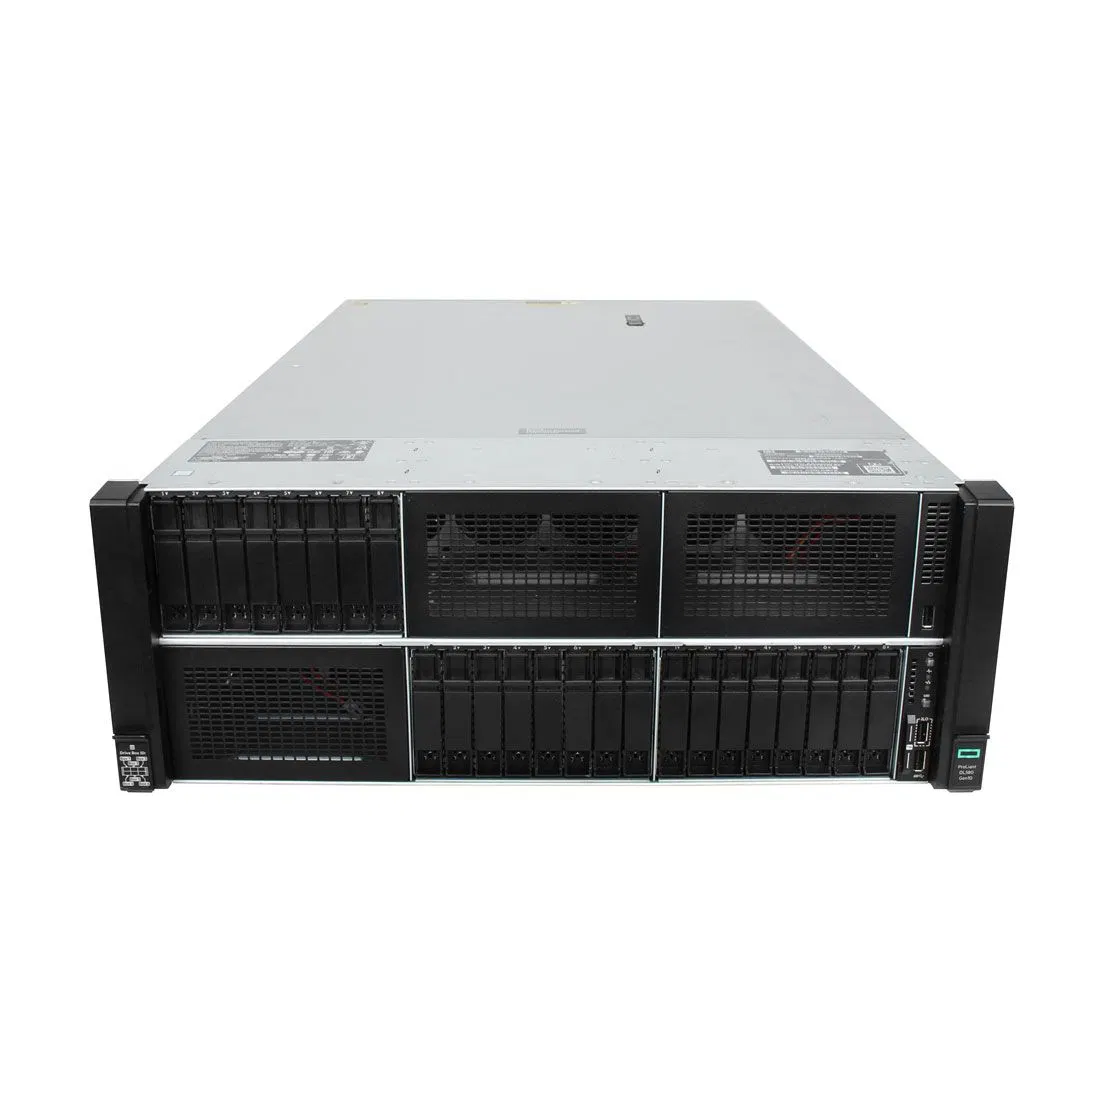 HPE iLO Server Computer التهيئة المخصصة للخوادم المُركبة على حامل شائعة في خادم الشبكة الكاملة HPE ProLiant Dl580 Gen10 4U